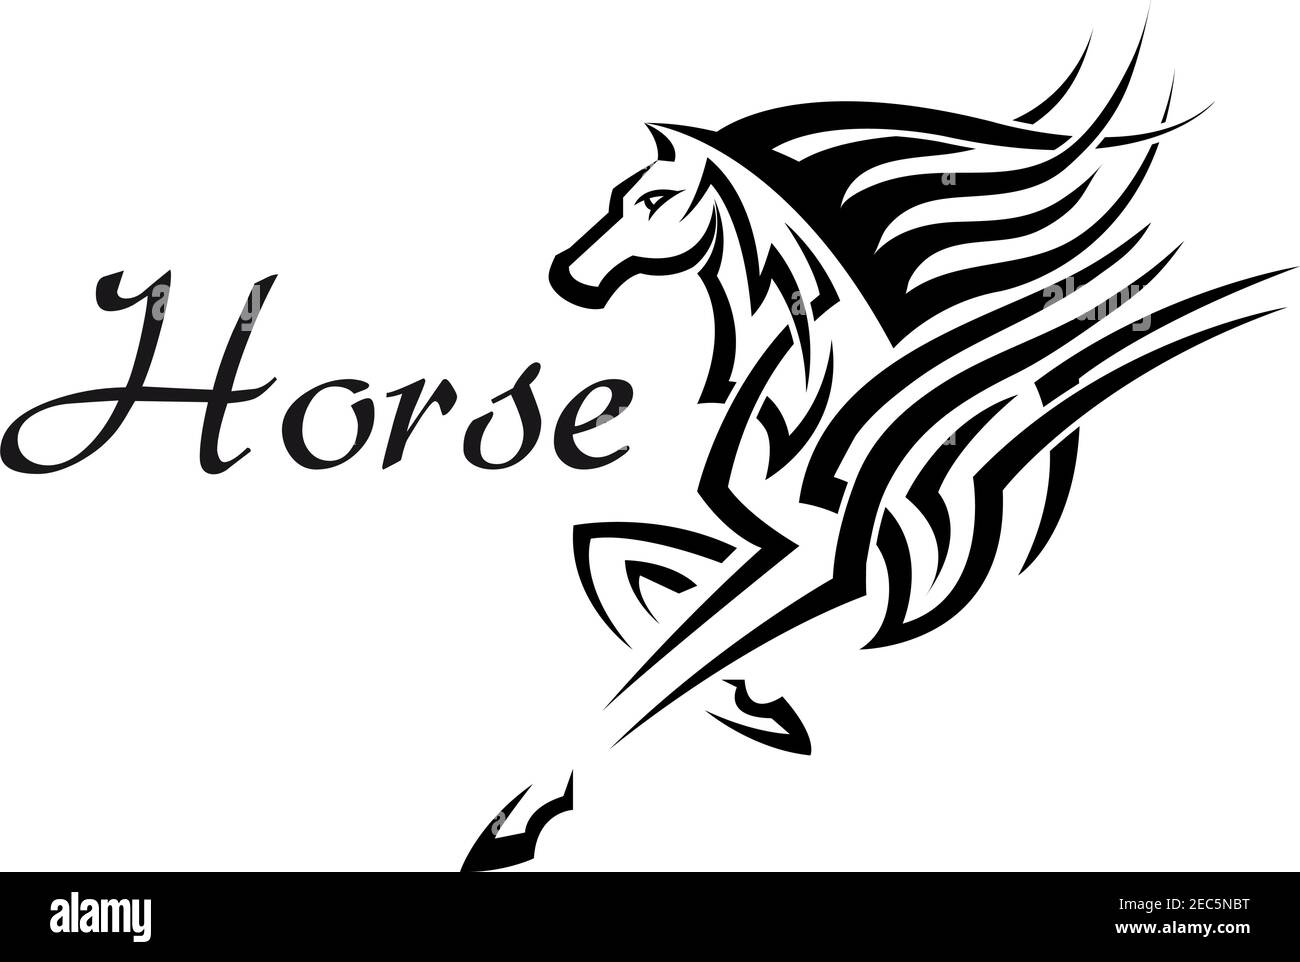 31 Simple  Easy Horse Tattoo Ideas